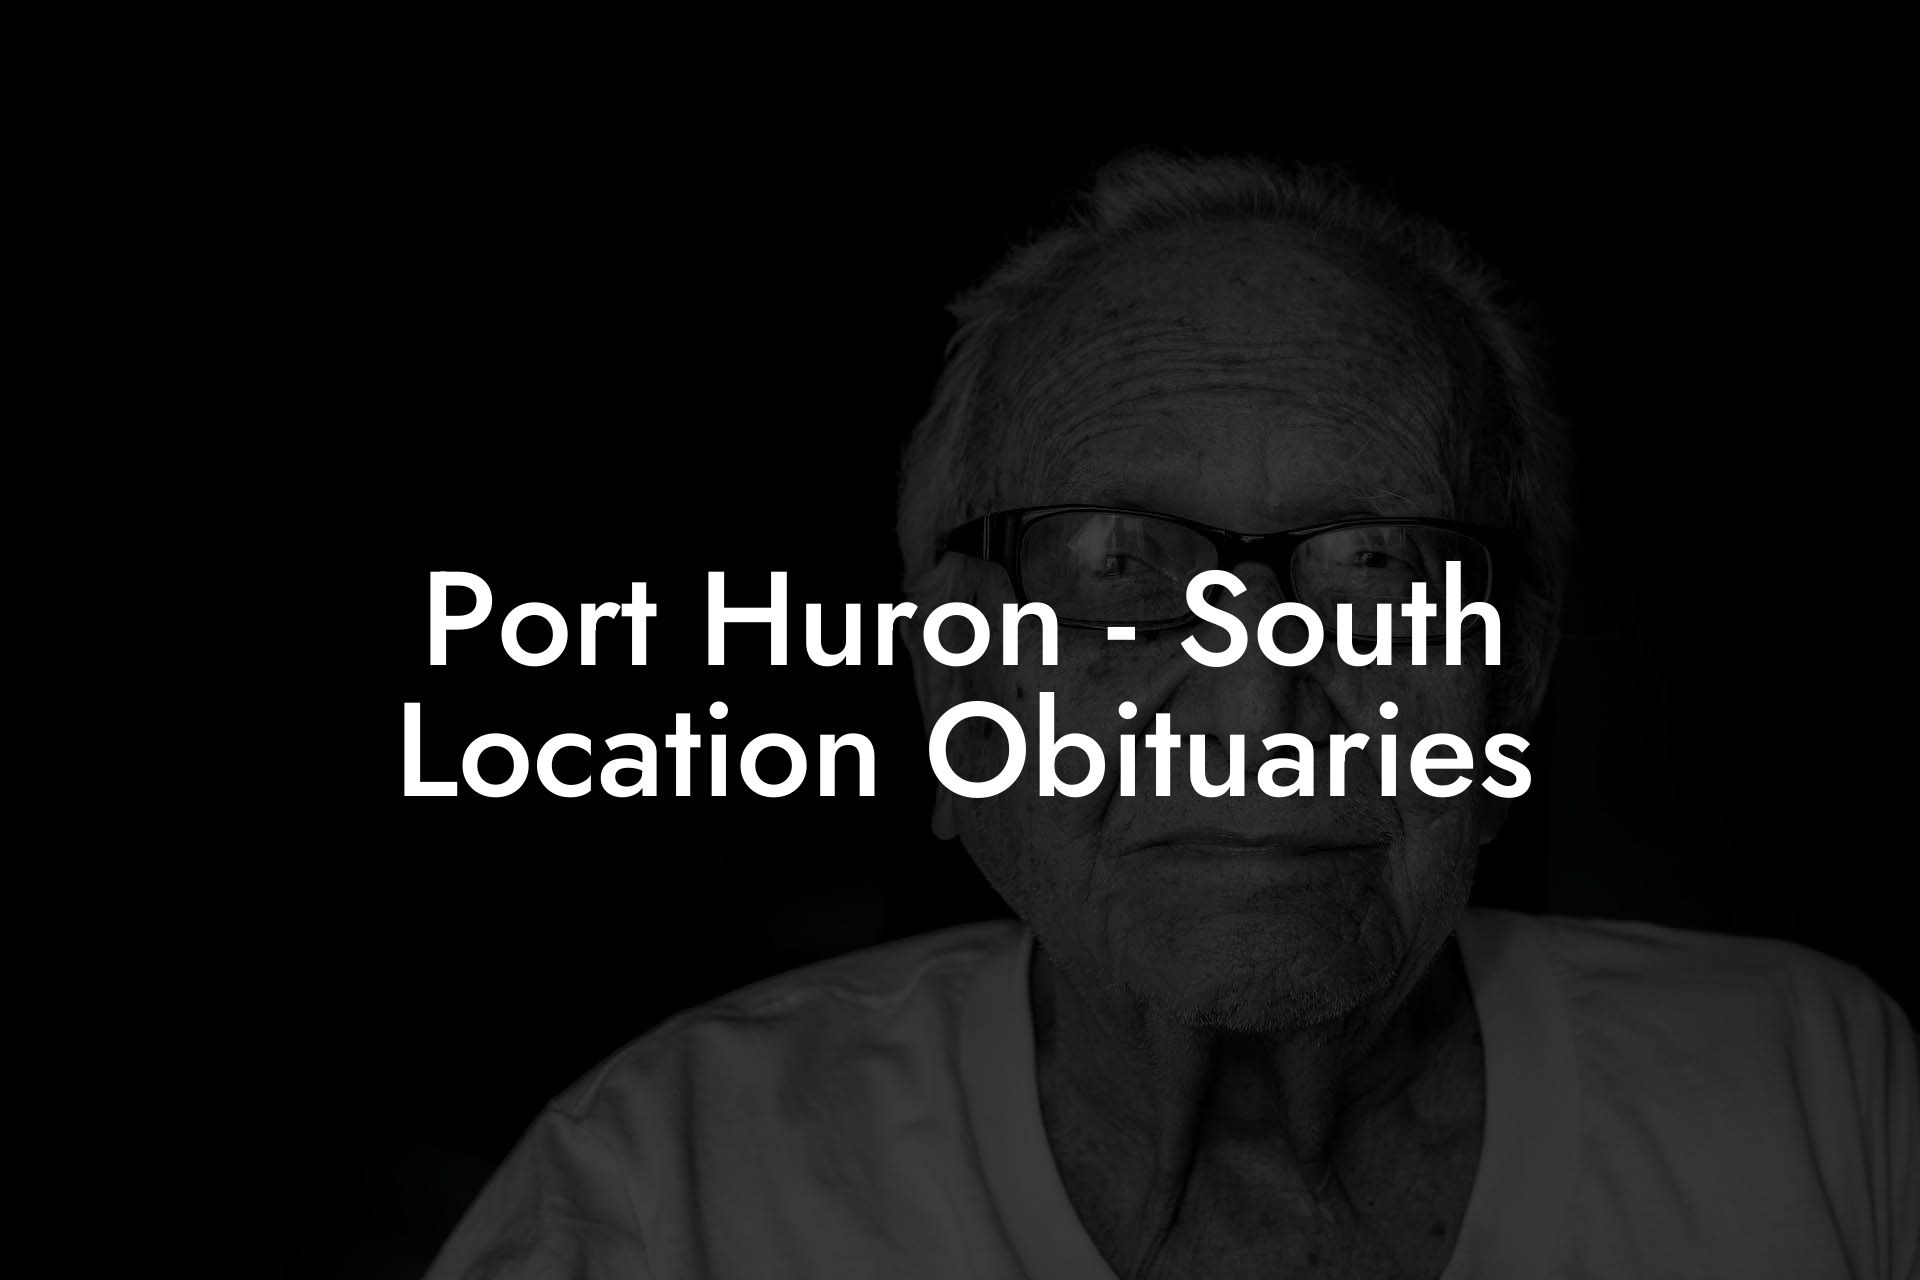 Port Huron - South Location Obituaries